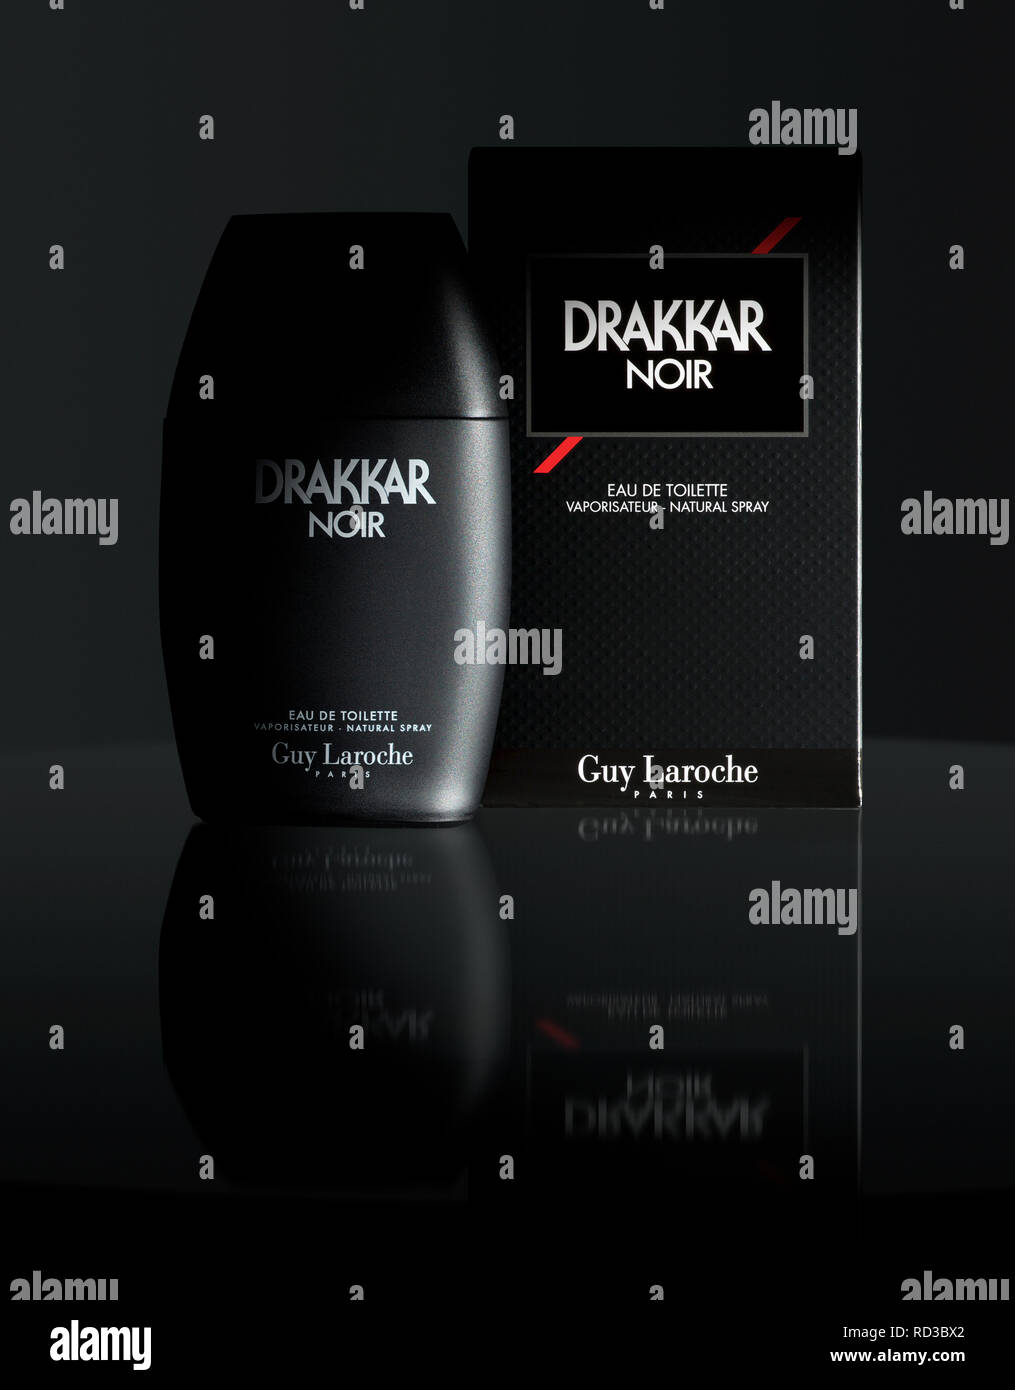 Drakkar Noir aftershave against dark background, studio shot Stock Photo